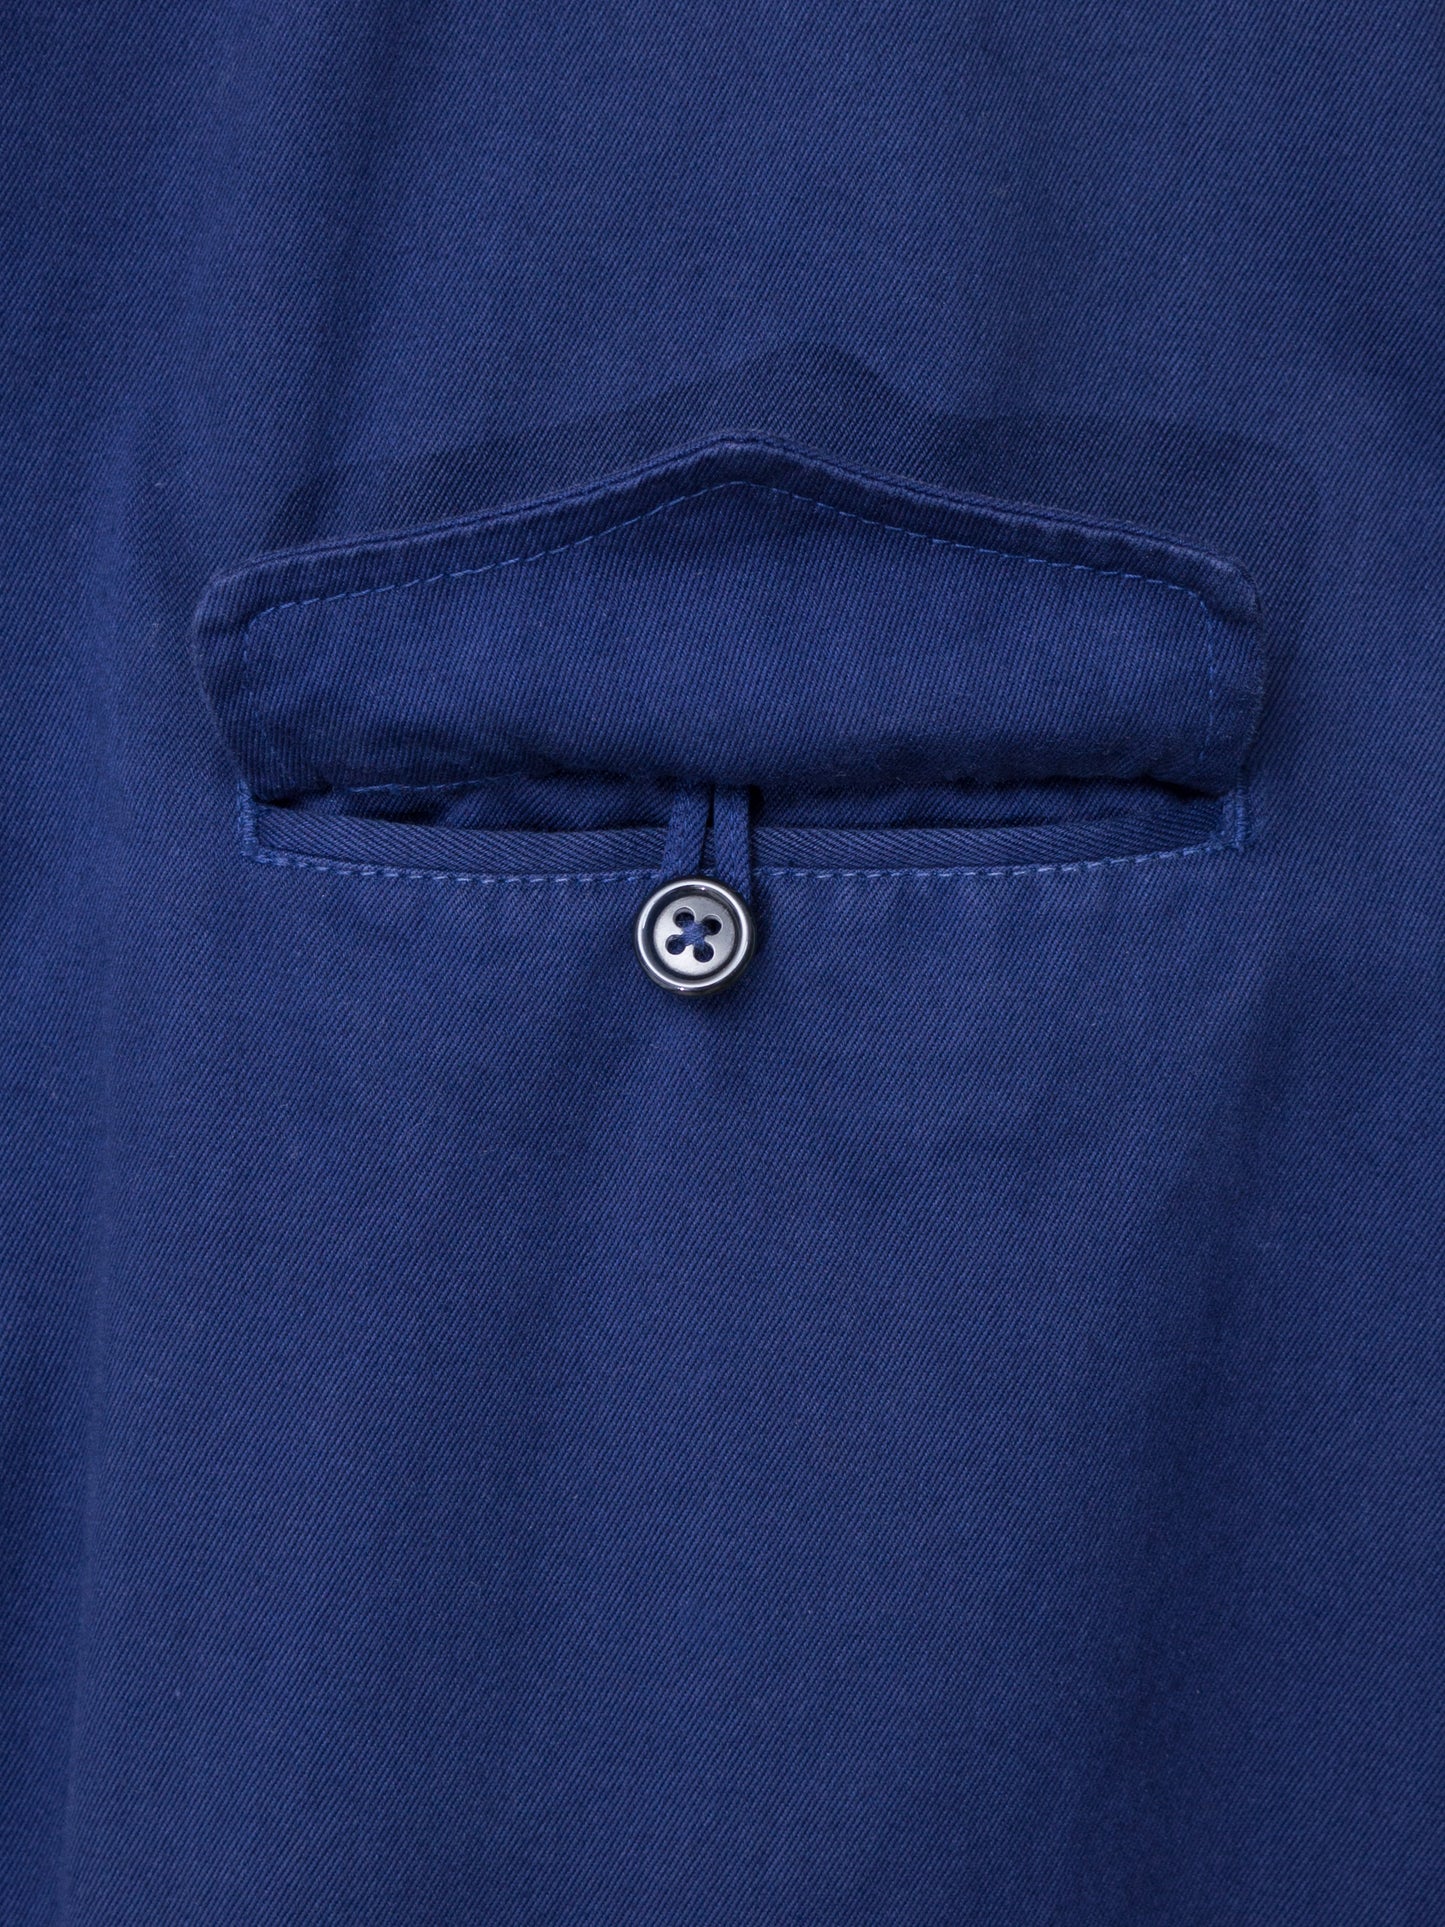 a/w 05 garment dyed shop coat blue ∙ cotton ∙ medium